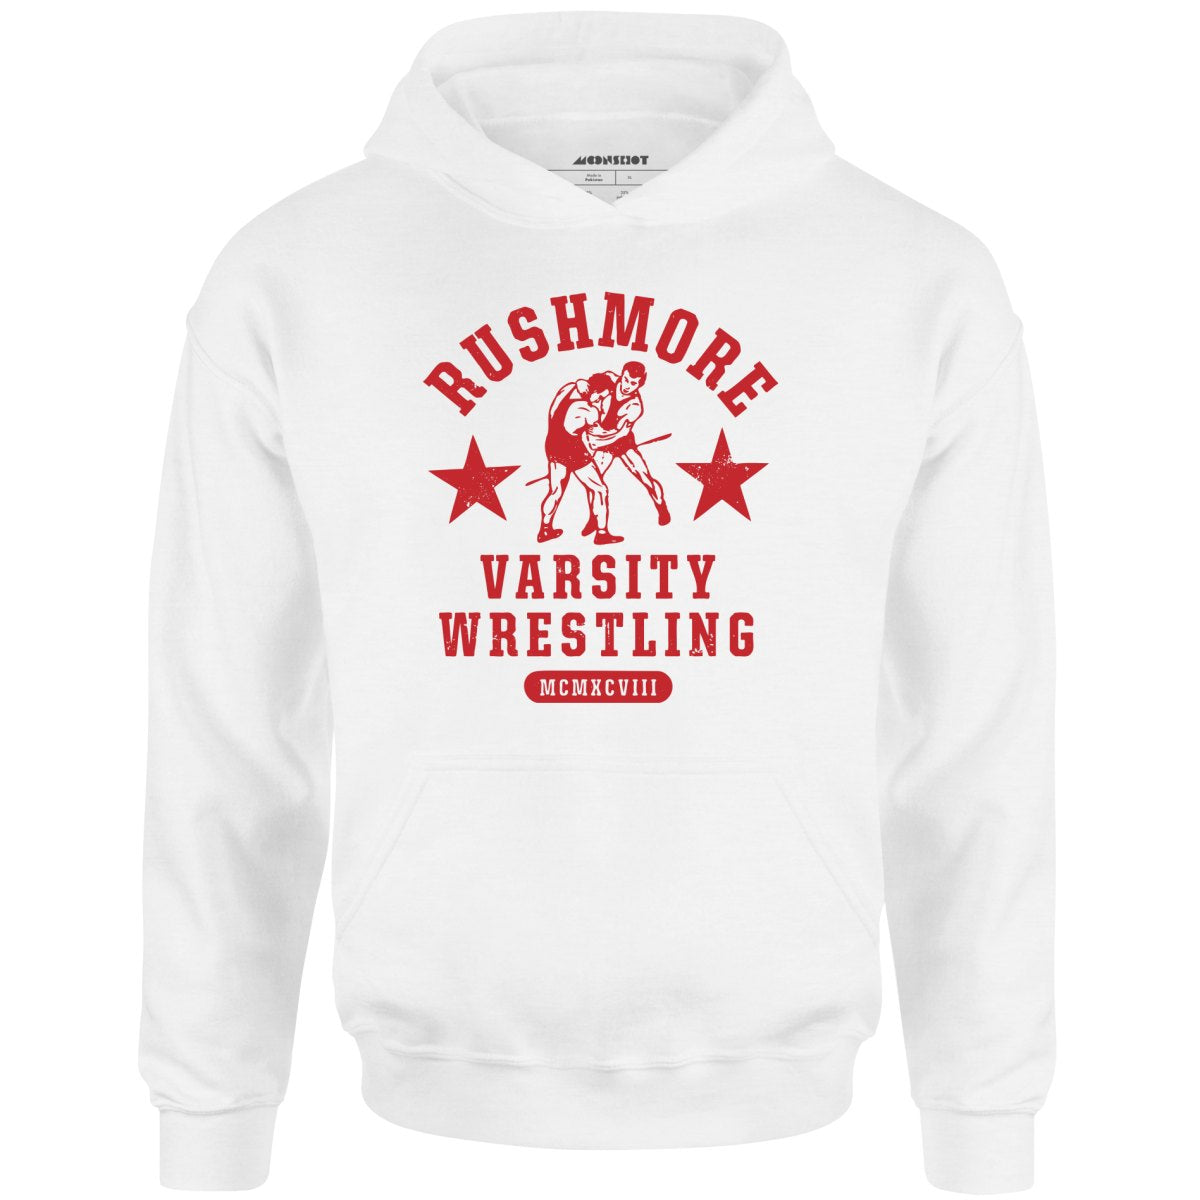 Rushmore Varsity Wrestling - Unisex Hoodie